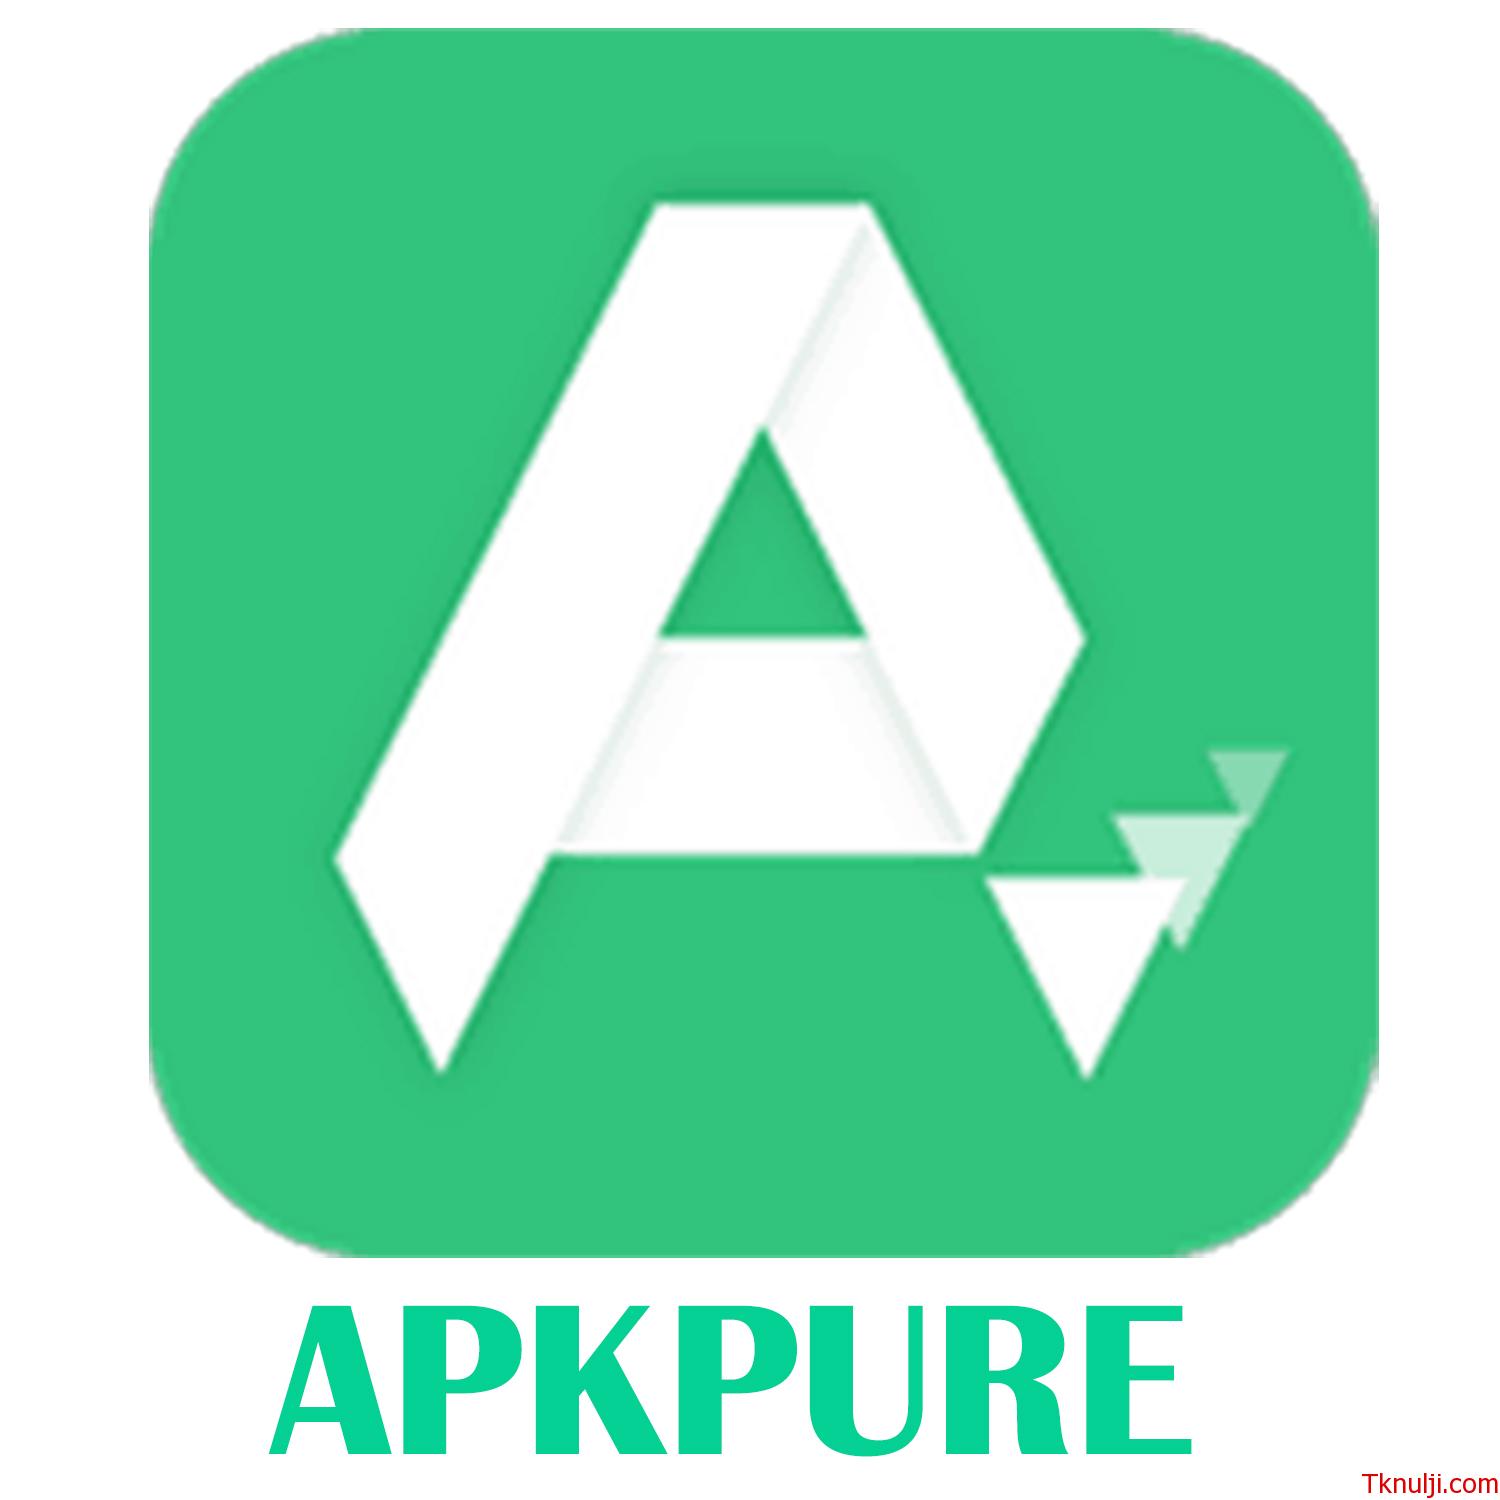 تحميل برنامج apkpure للاندرويد من ميديا فاير اخر اصدار 2022